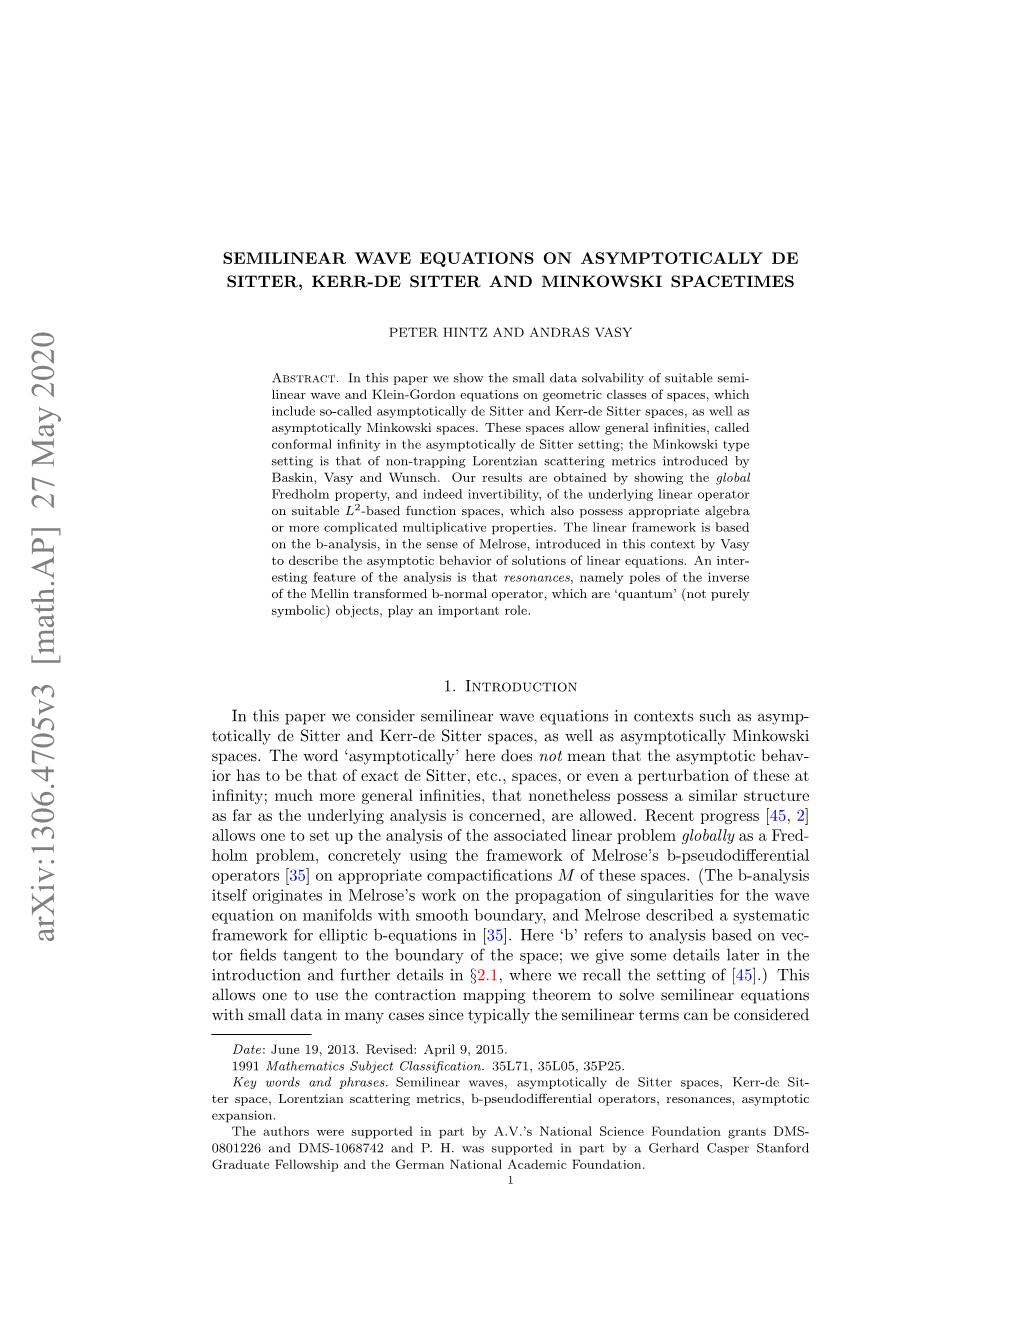 Semilinear Wave Equations on Asymptotically De Sitter, Kerr-De Sitter and Minkowski Spacetimes